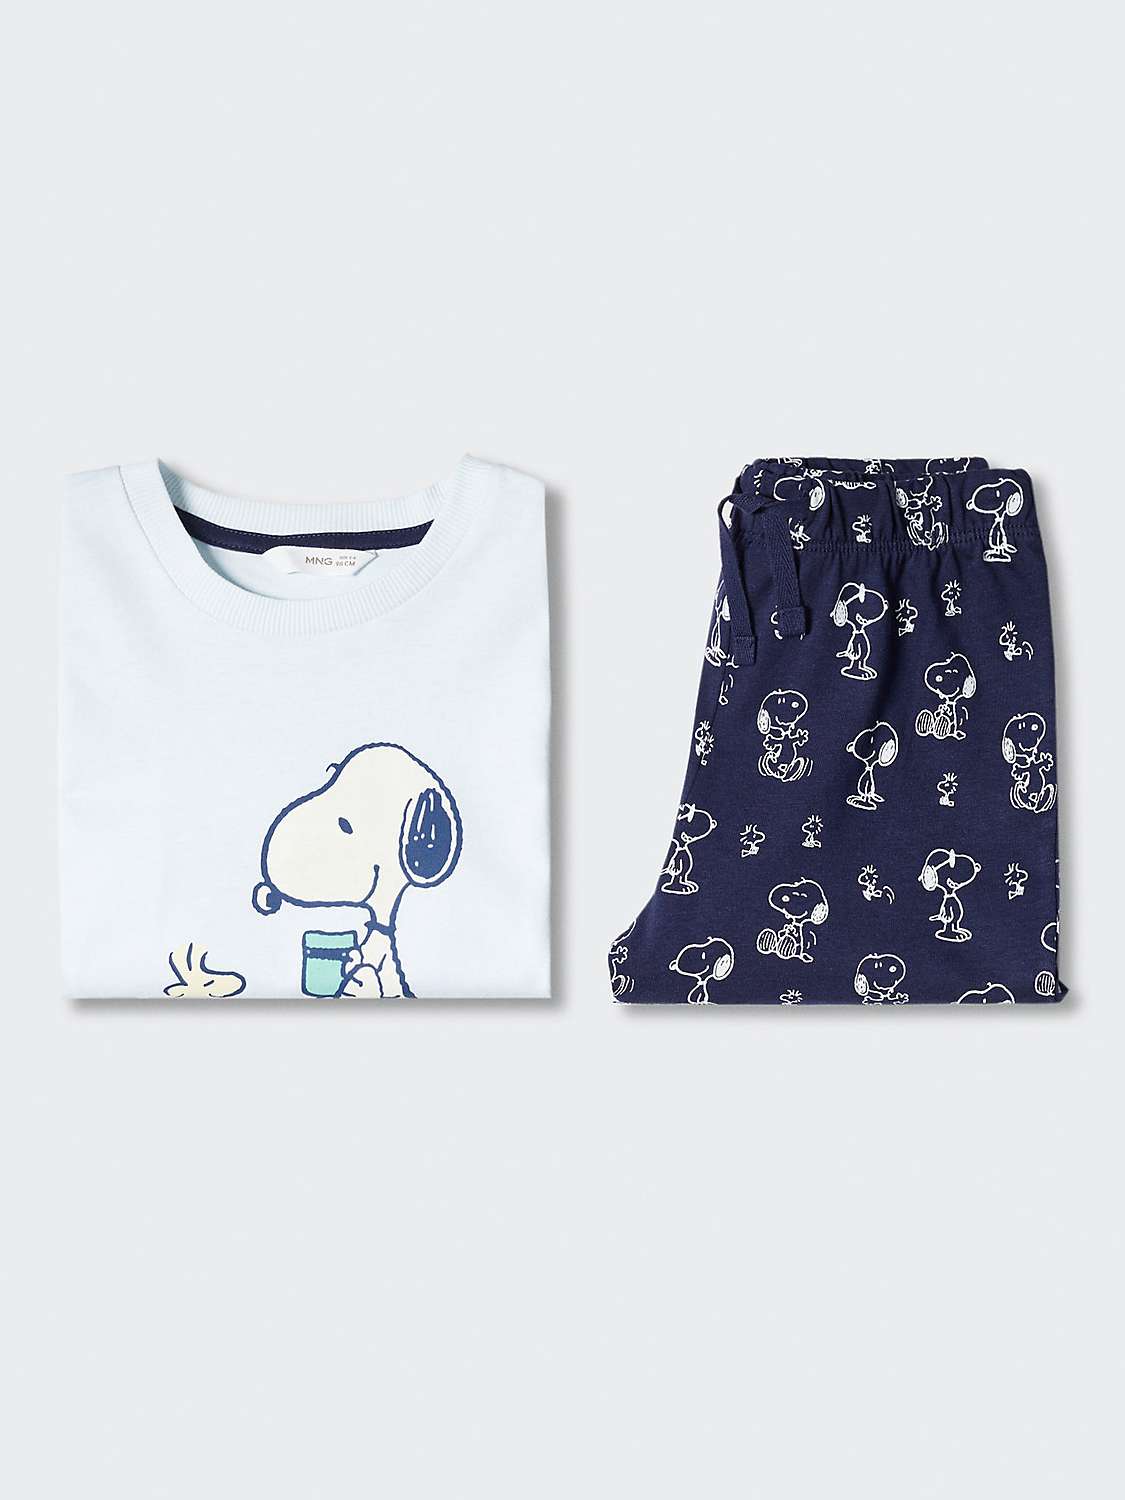 Buy Mango Baby Pyfriend Snoopy Short Pyjamas, Light Pastel Blue Online at johnlewis.com